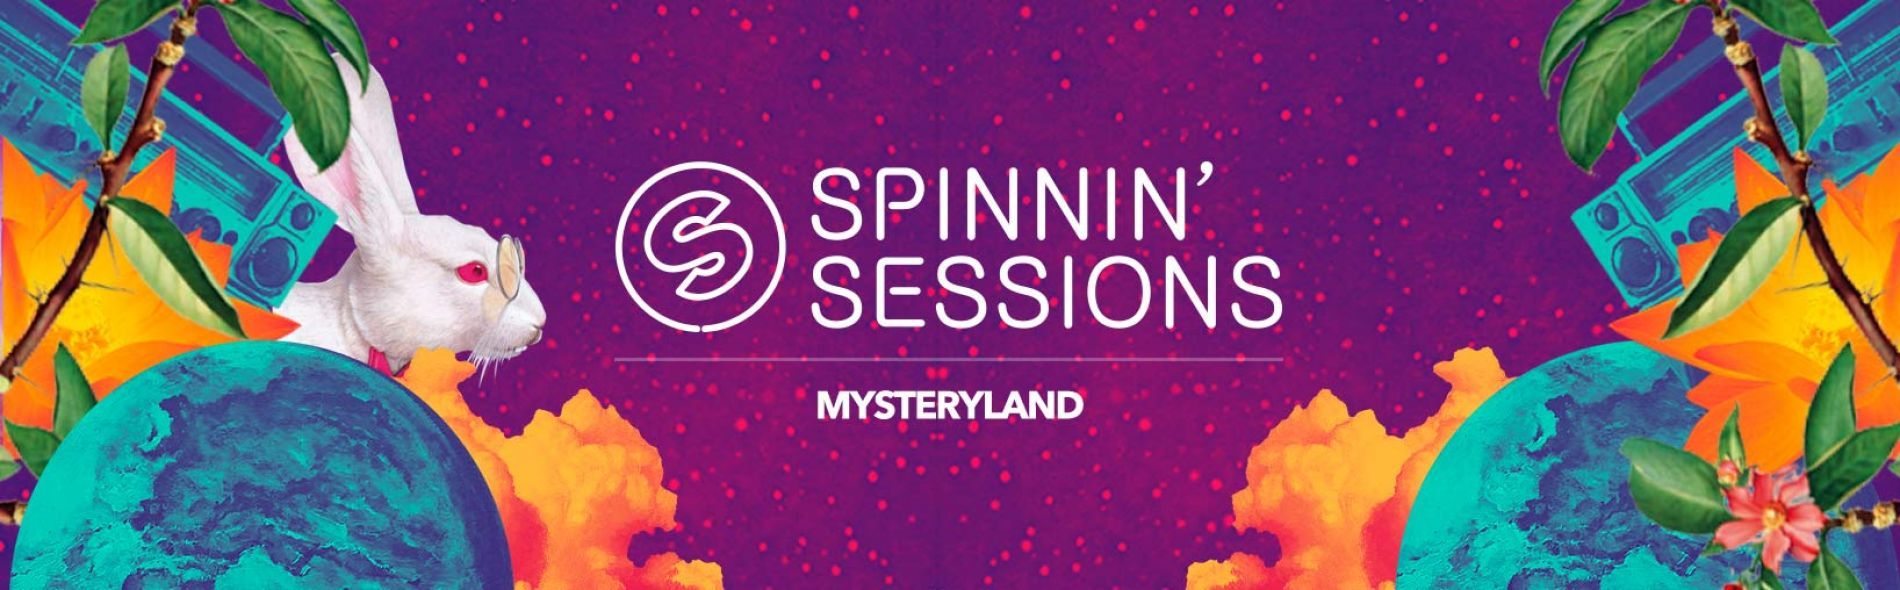 Spinnin' Sessions Mysteryland 2016